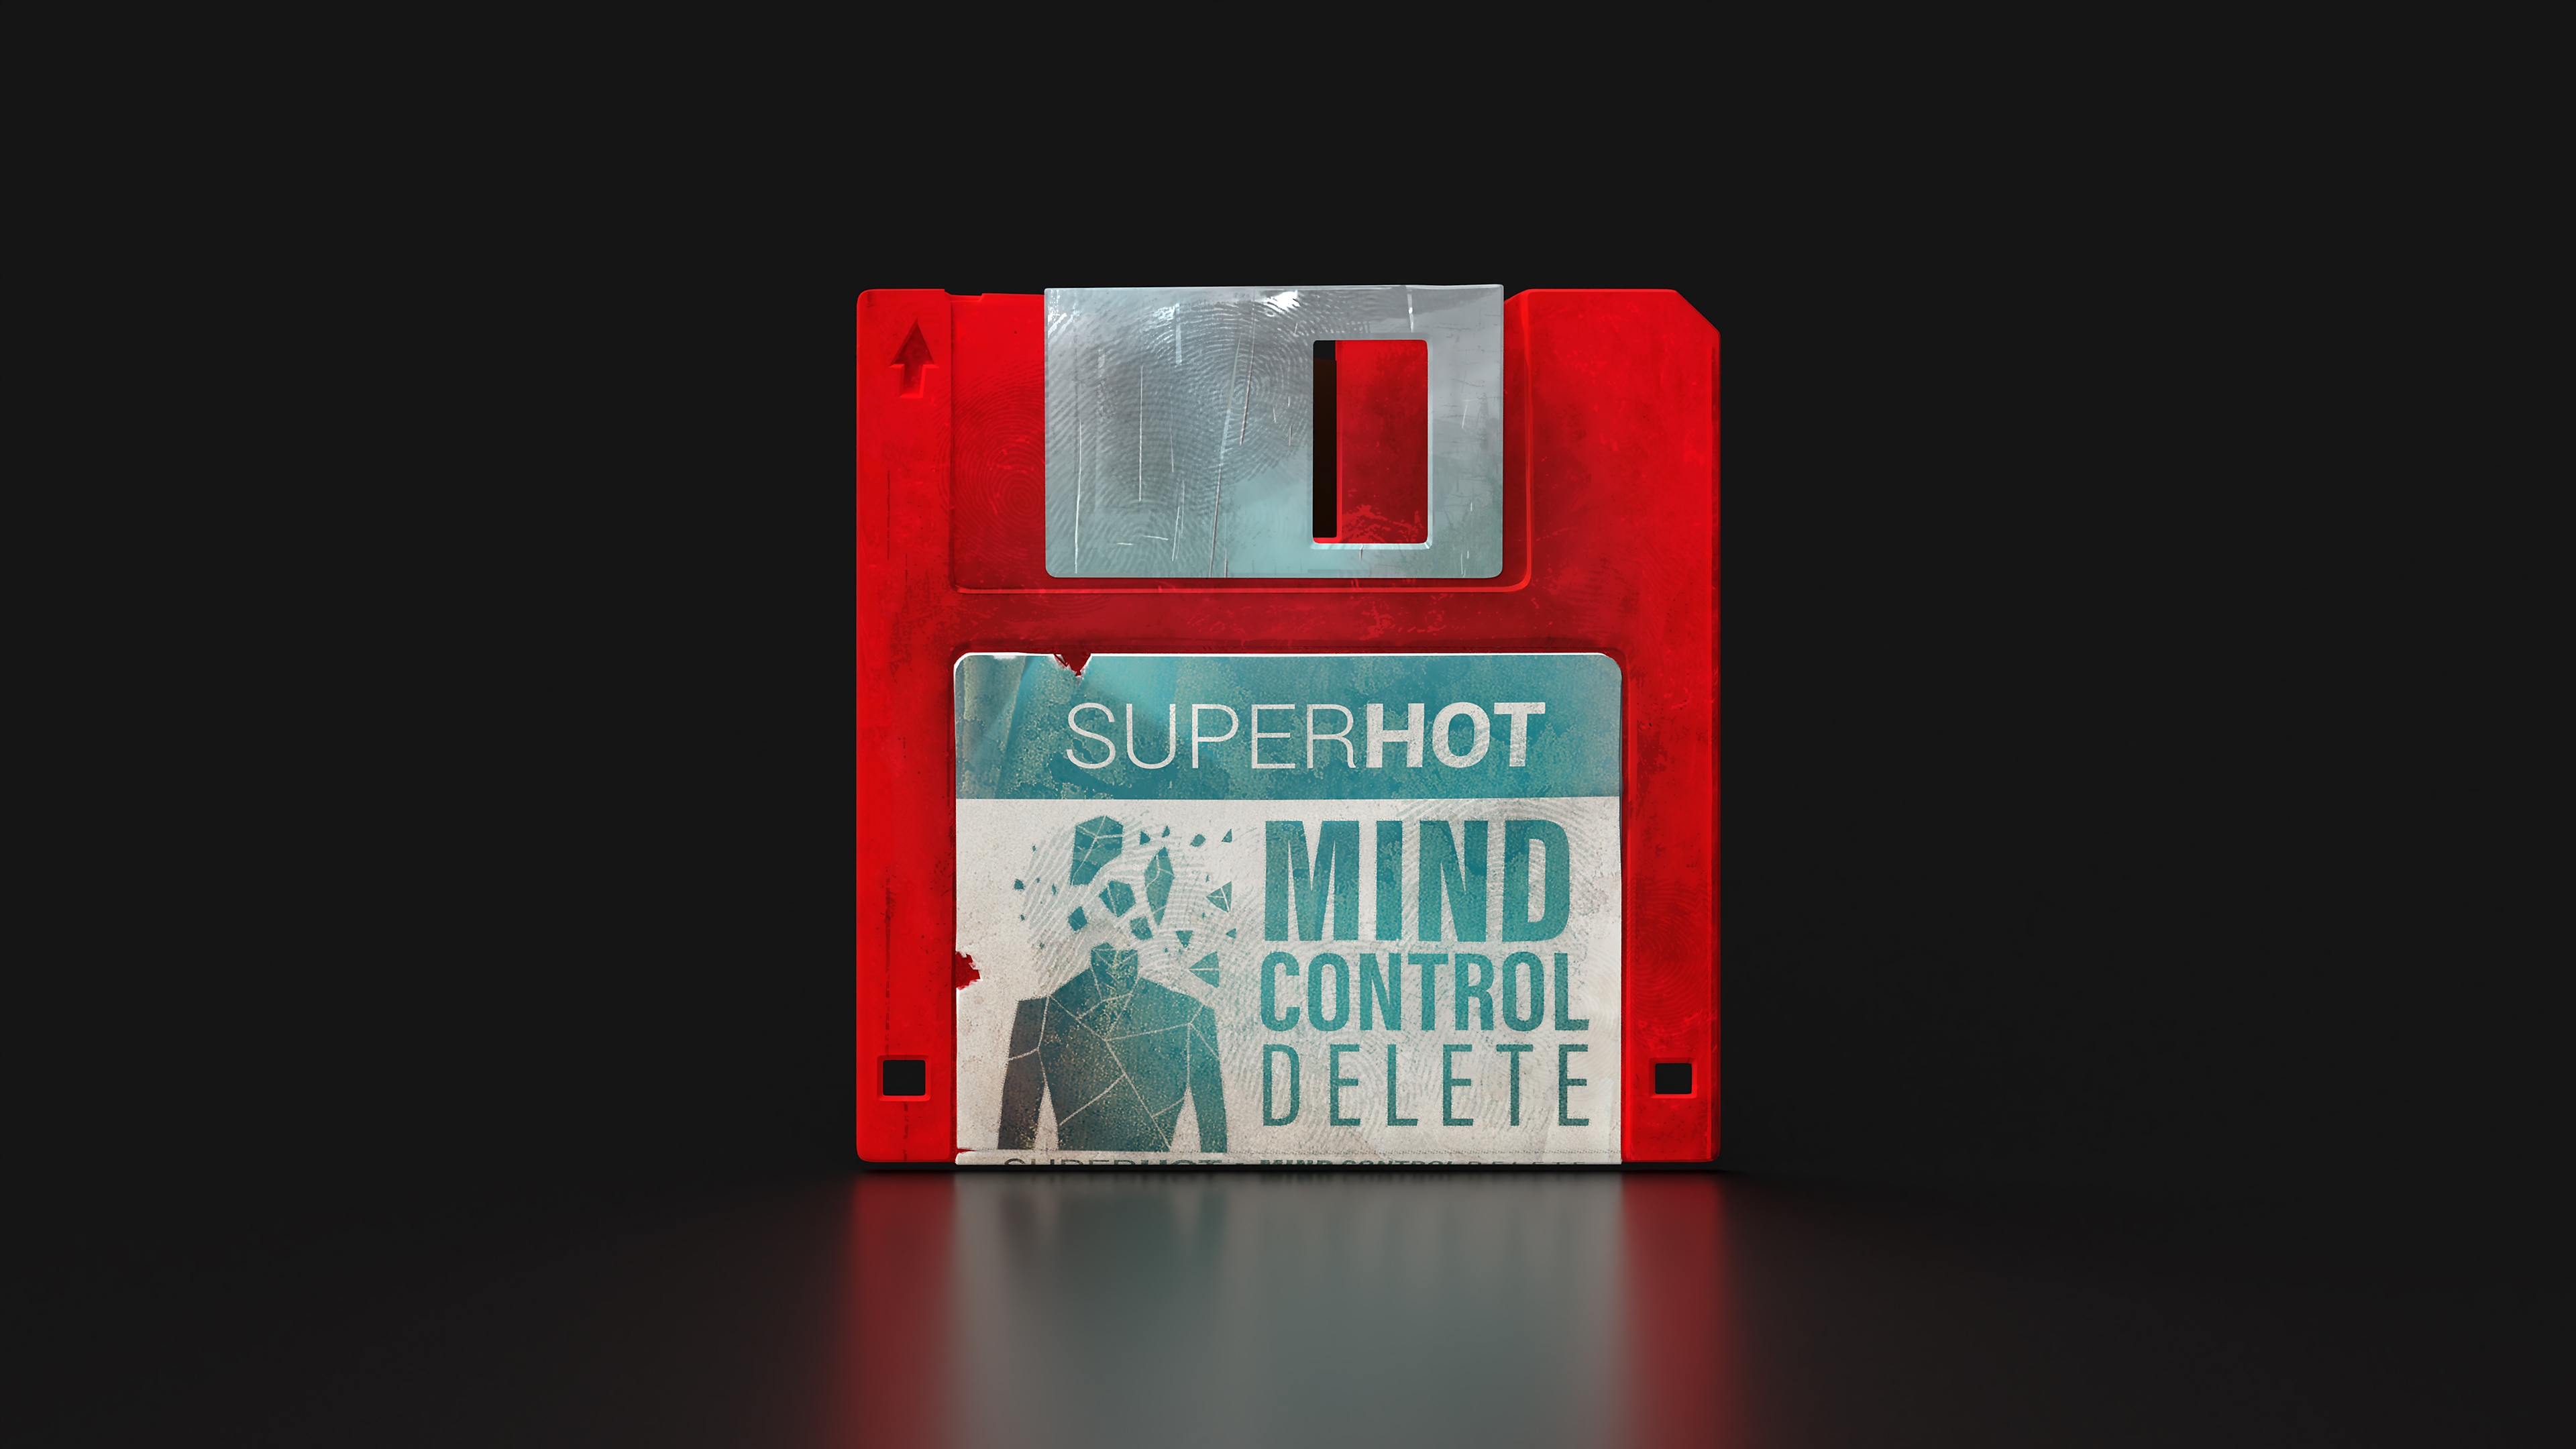 SUPERHOT: MIND CONTROL DELETE PC